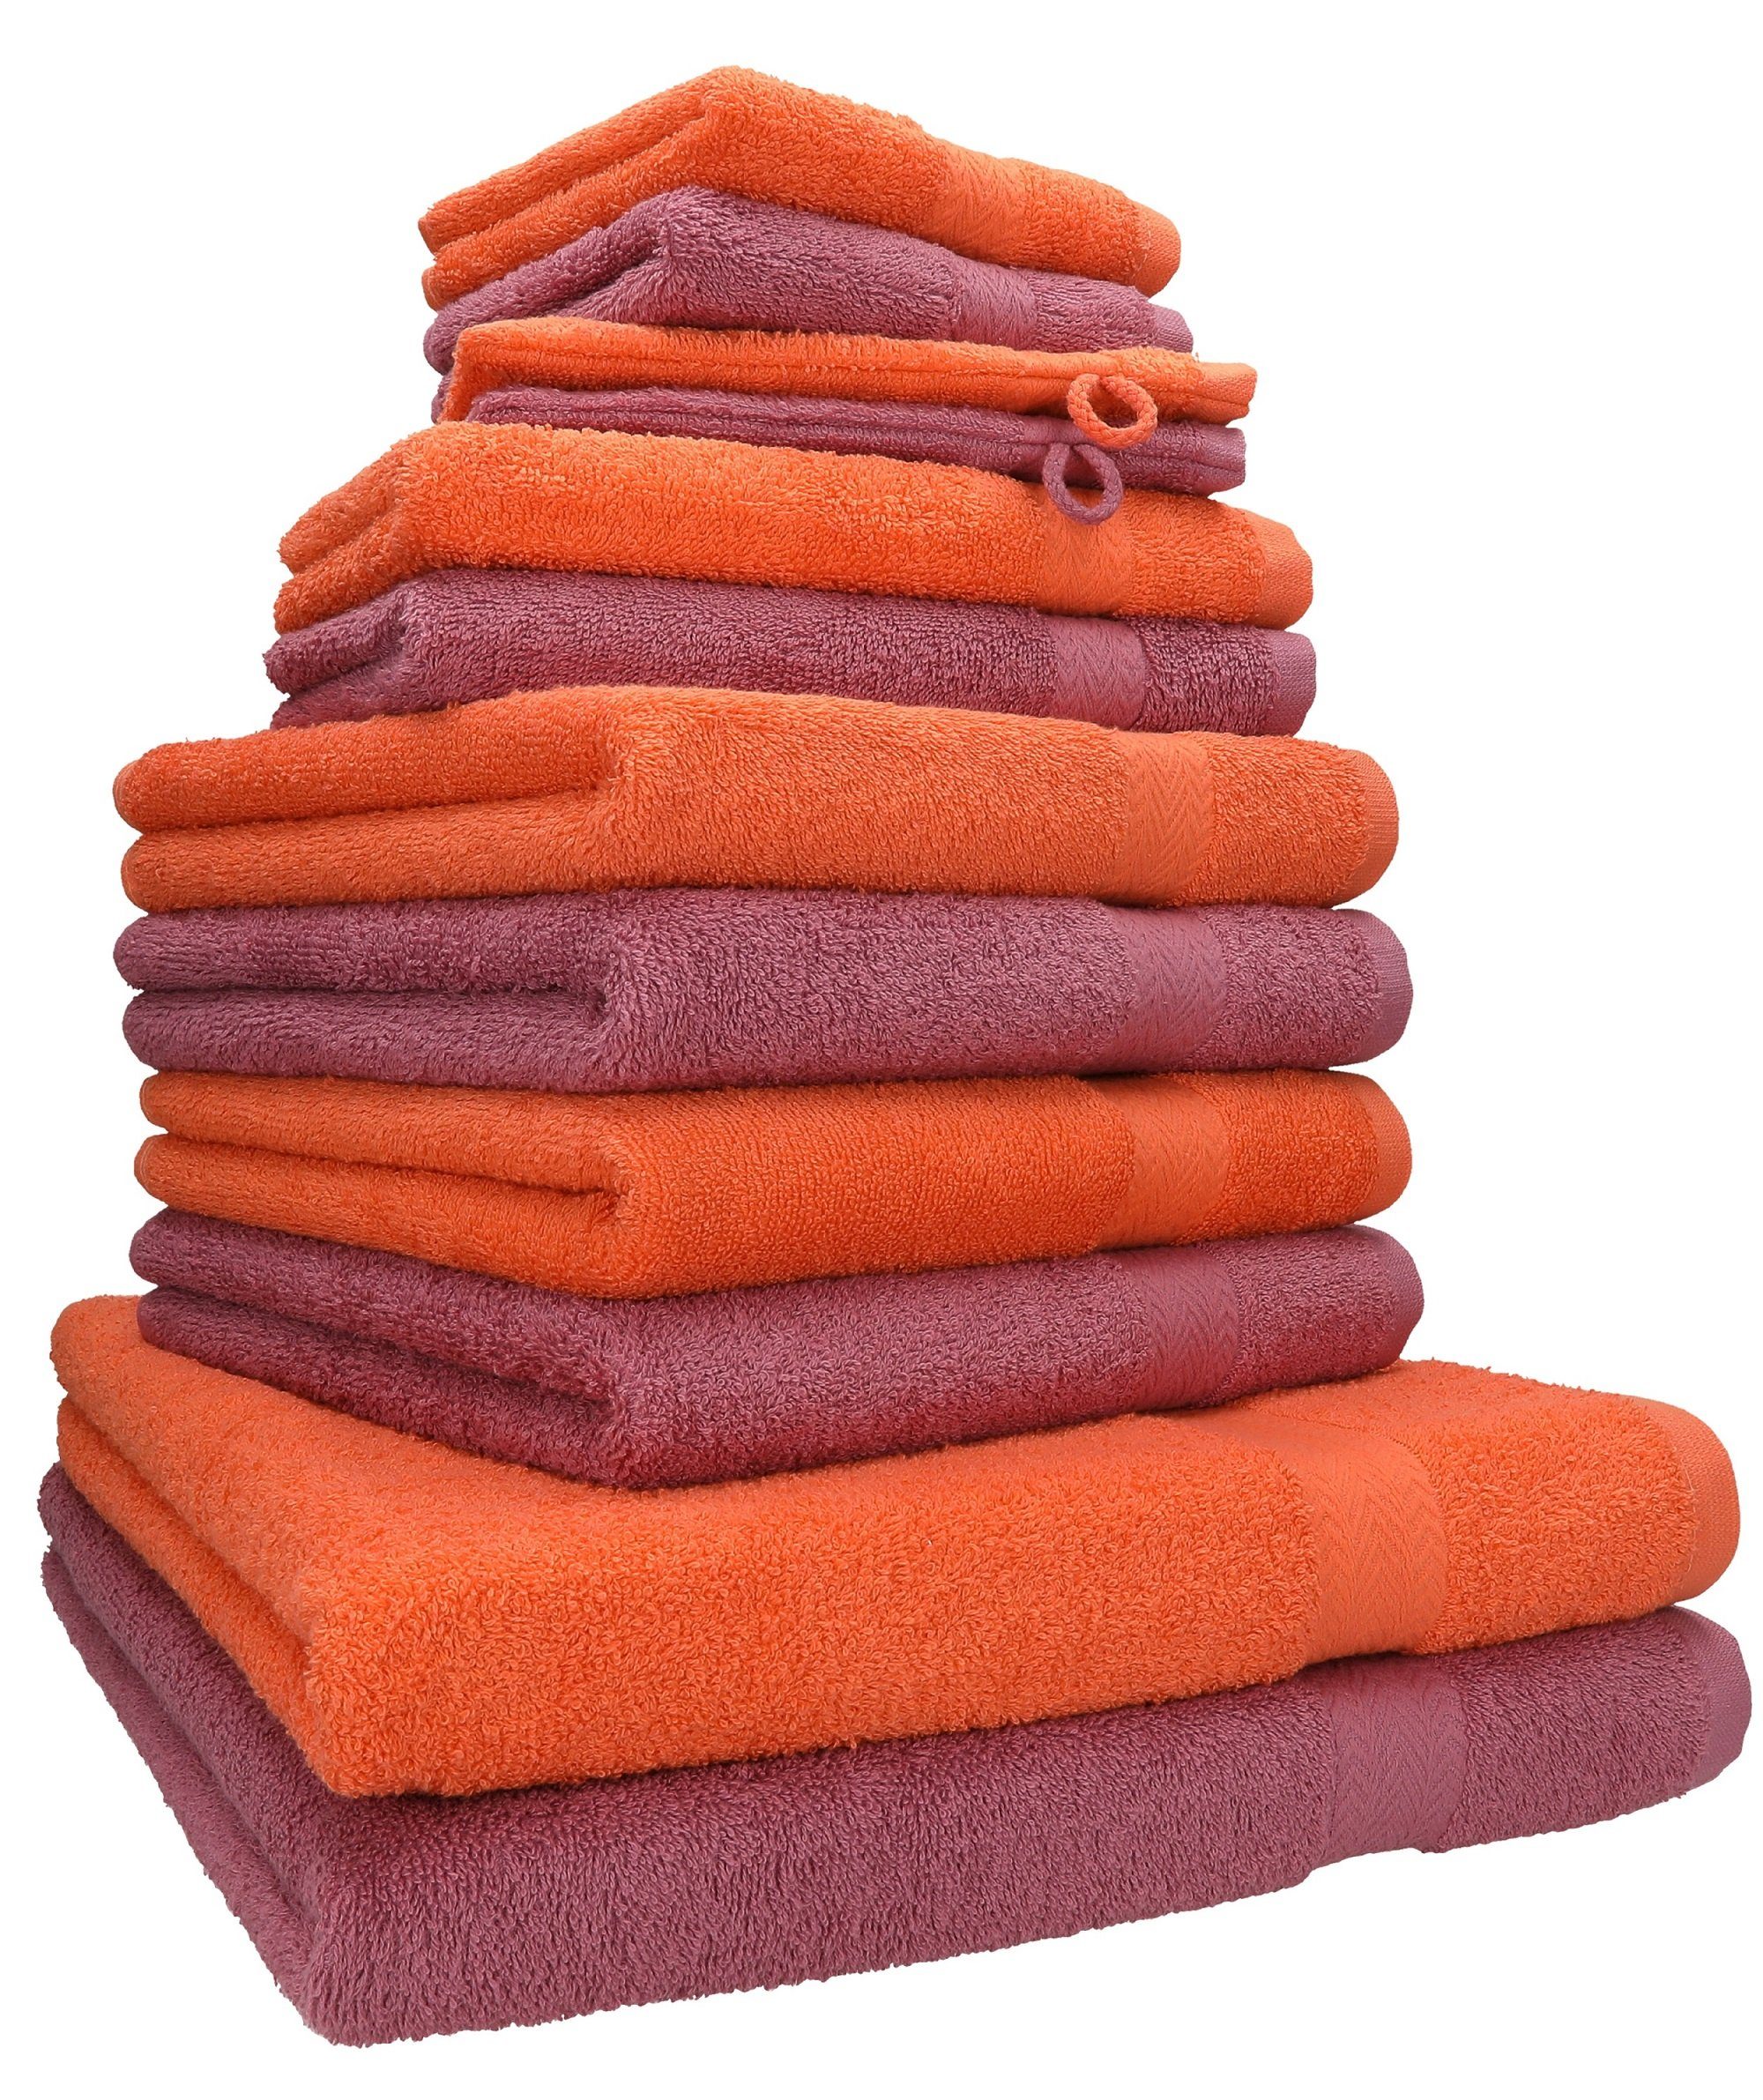 Betz Handtuch Set 12-TLG. Handtuch Farbe 2 4 2 (12-tlg) Handtücher Baumwolle 100% Seiftücher 2 blutorange/Beere, Gästetücher Set Duschtücher 2 Premium 100% Waschhandschuhe Baumwolle